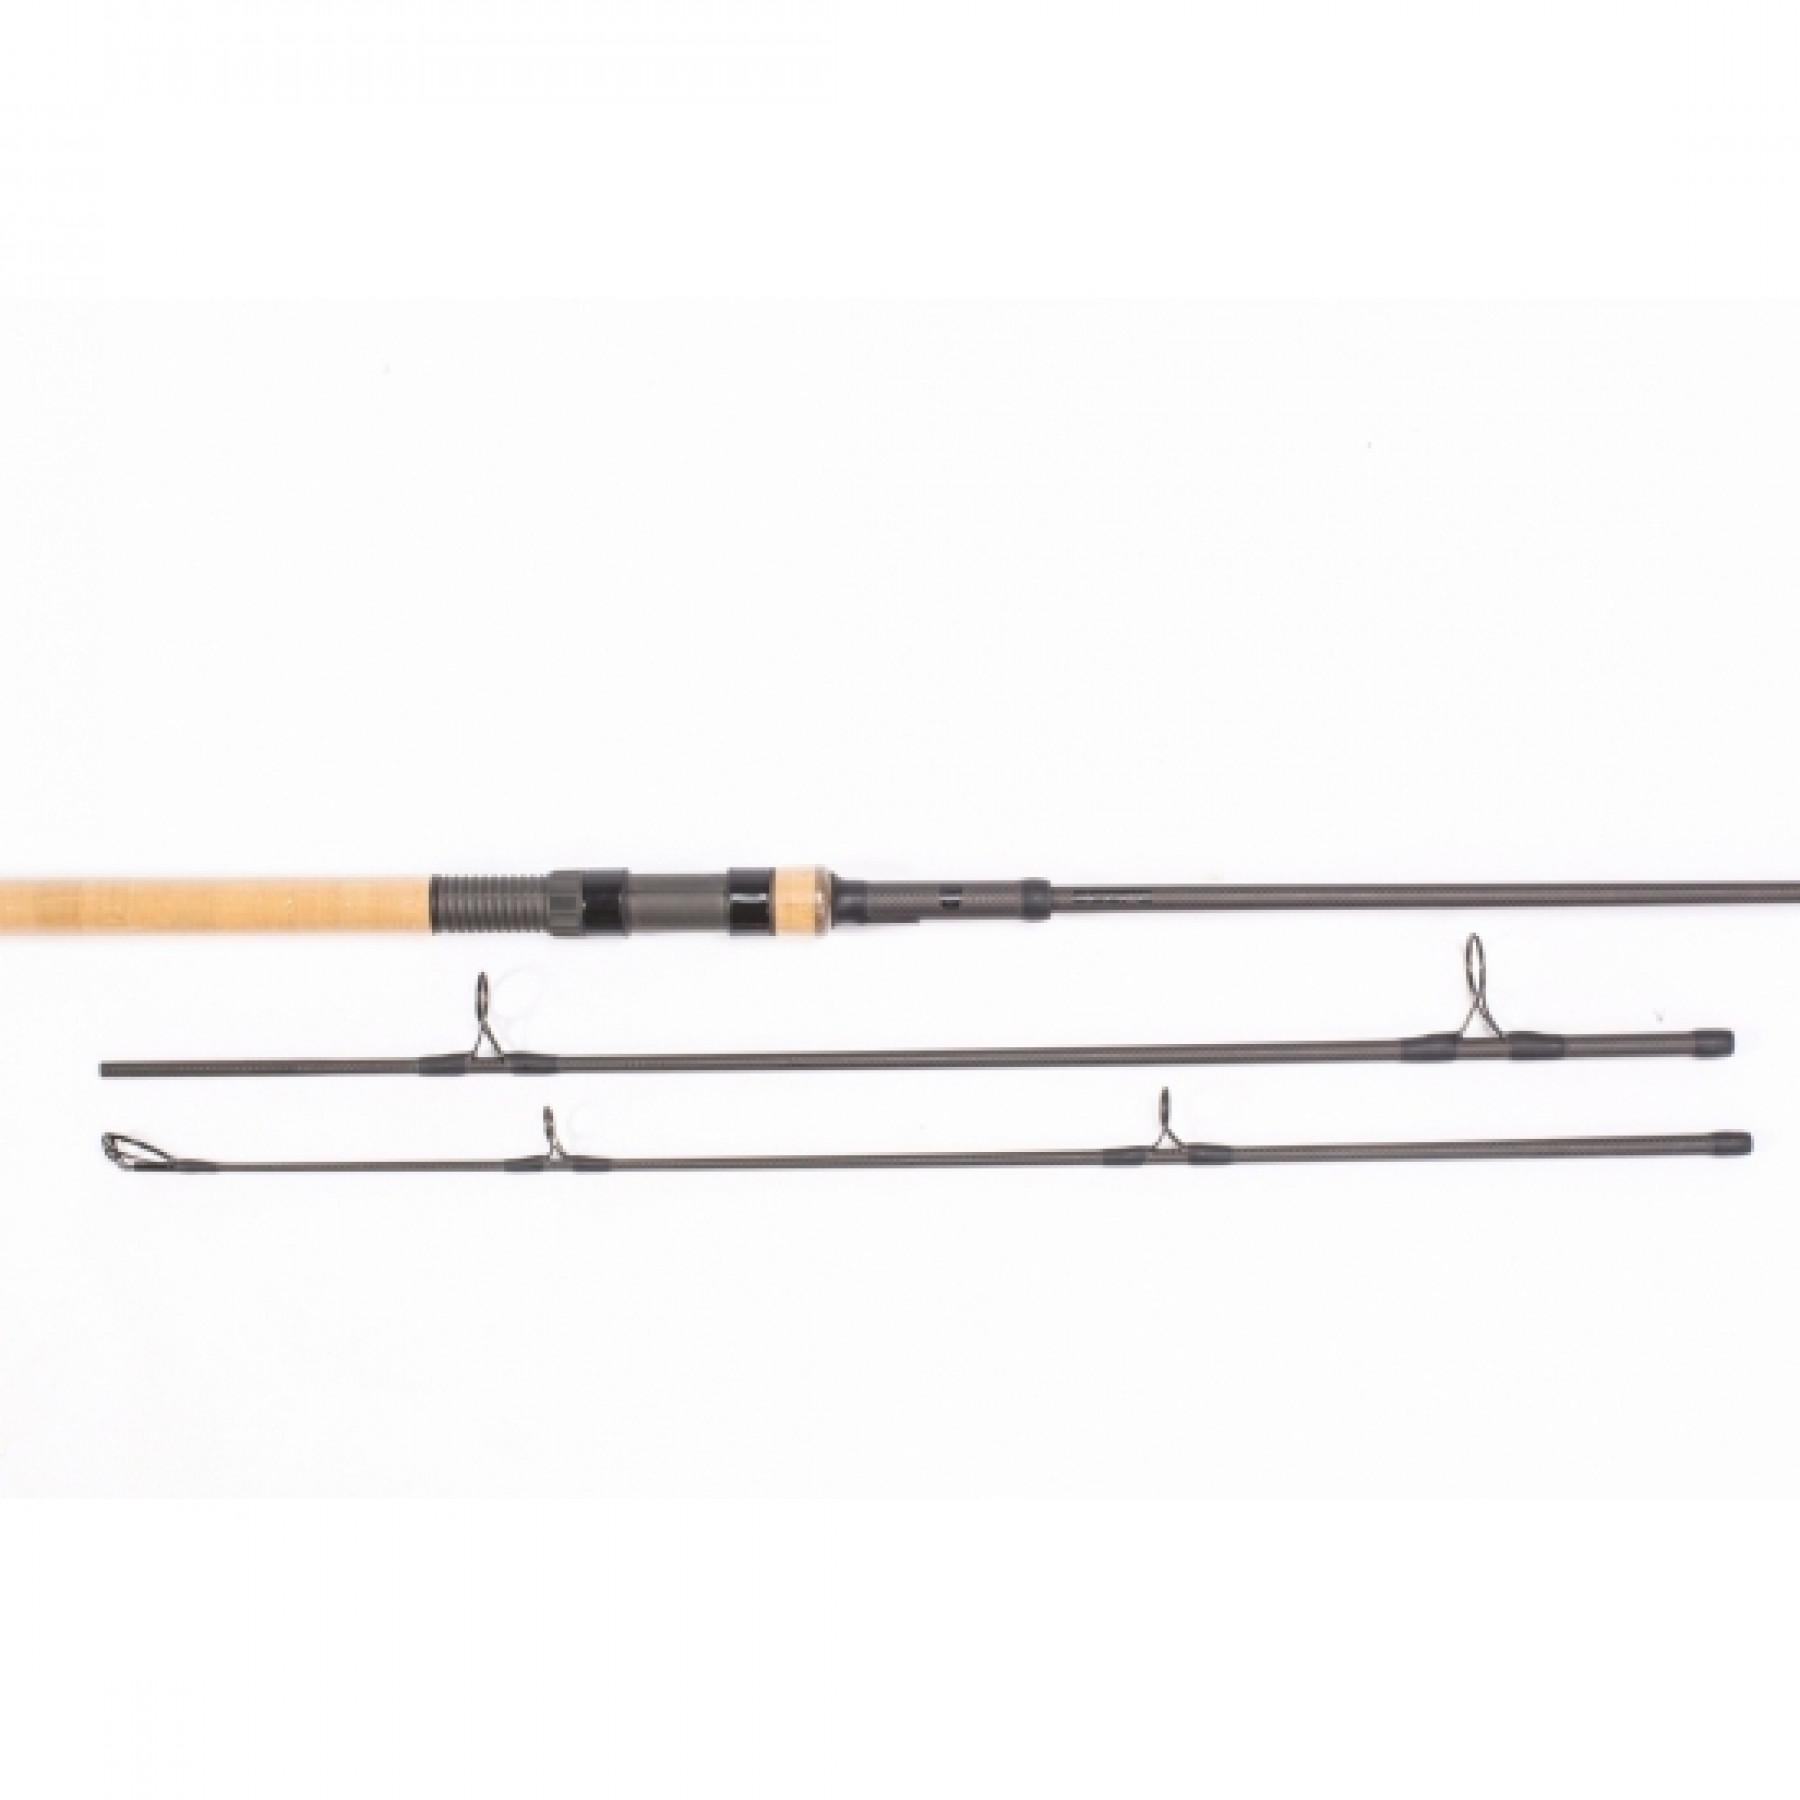 Fishing rod Scope Snide 6ft 2lb